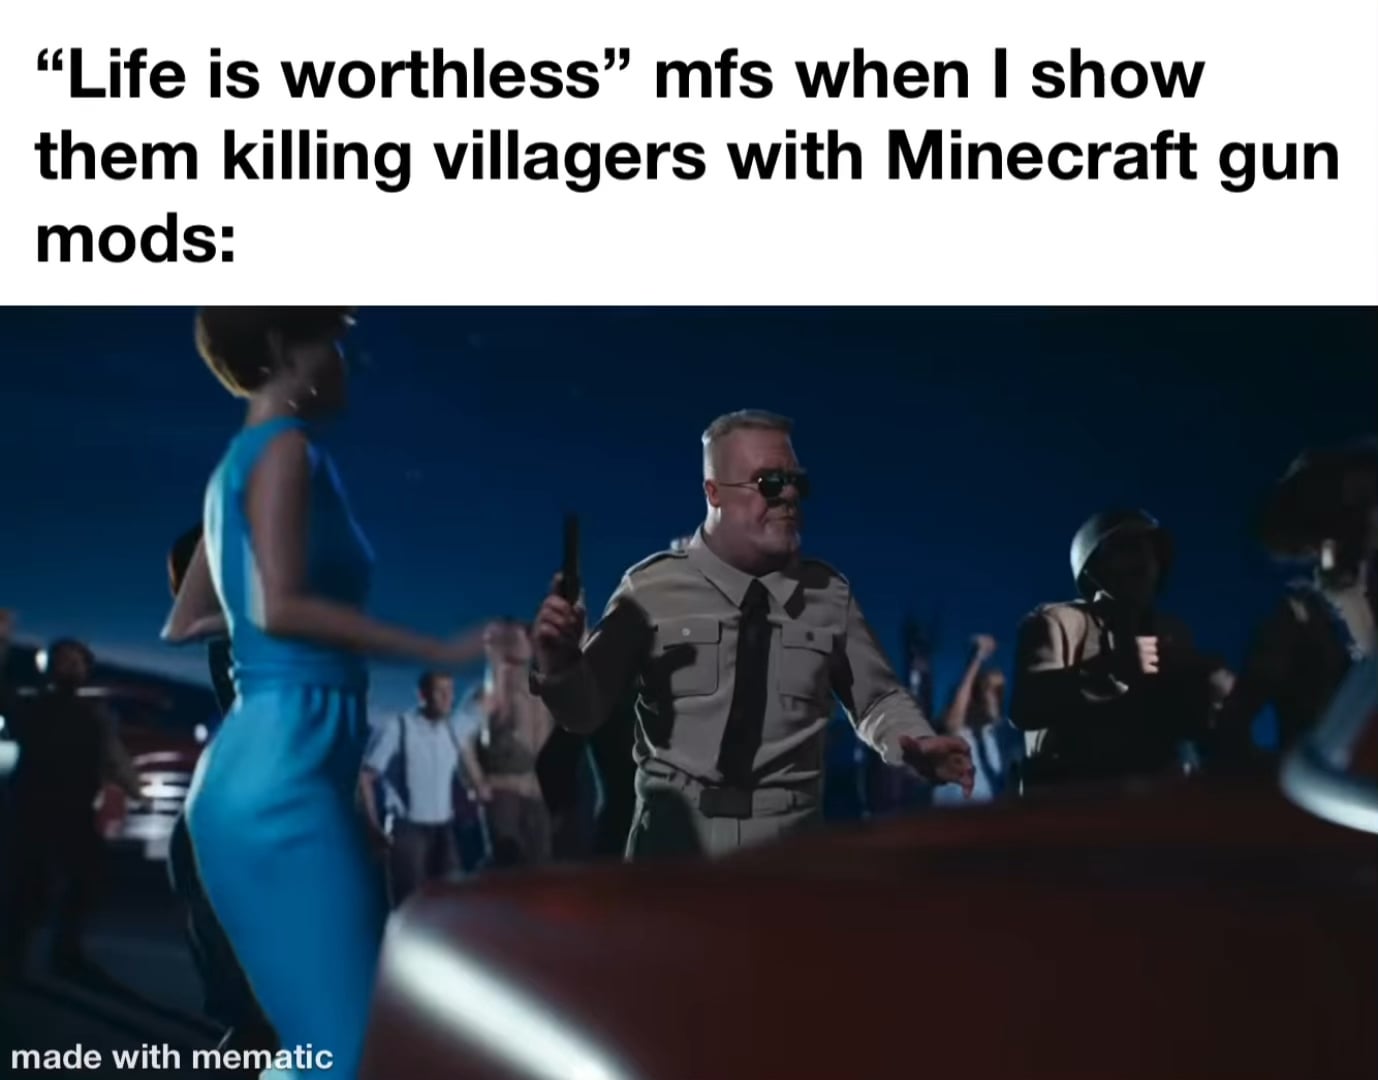 Minecraft Memes - "Relax, it's just dark humor"